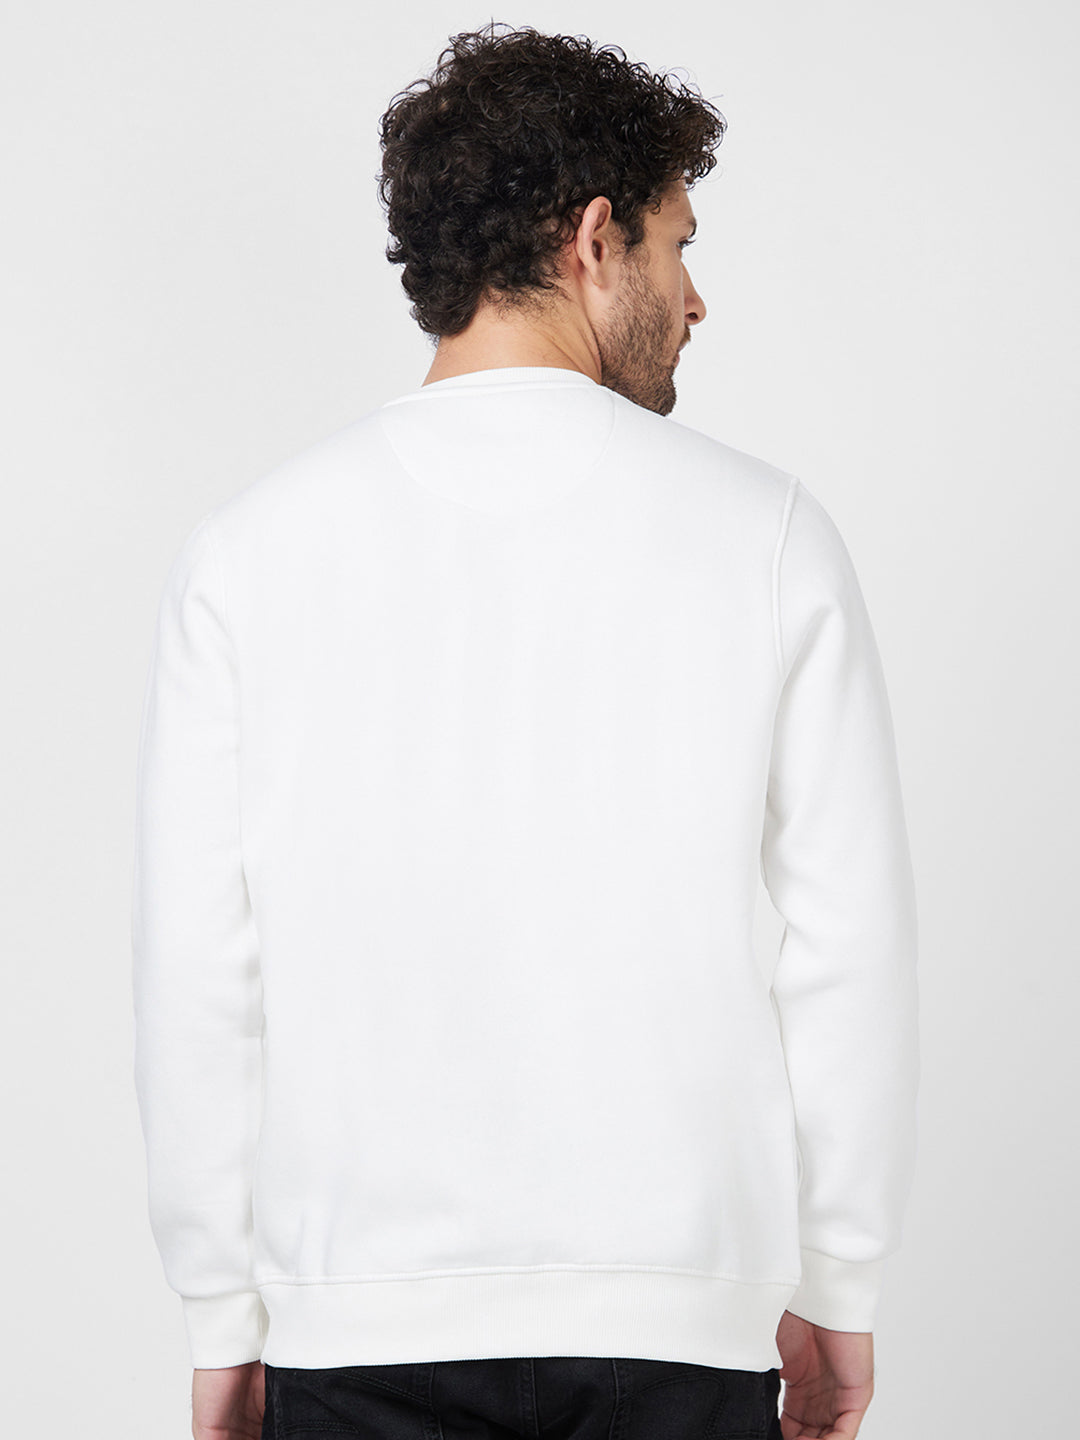 Spykar Slim Fit Round Neck Full Sleeve White Sweatshirt For Men